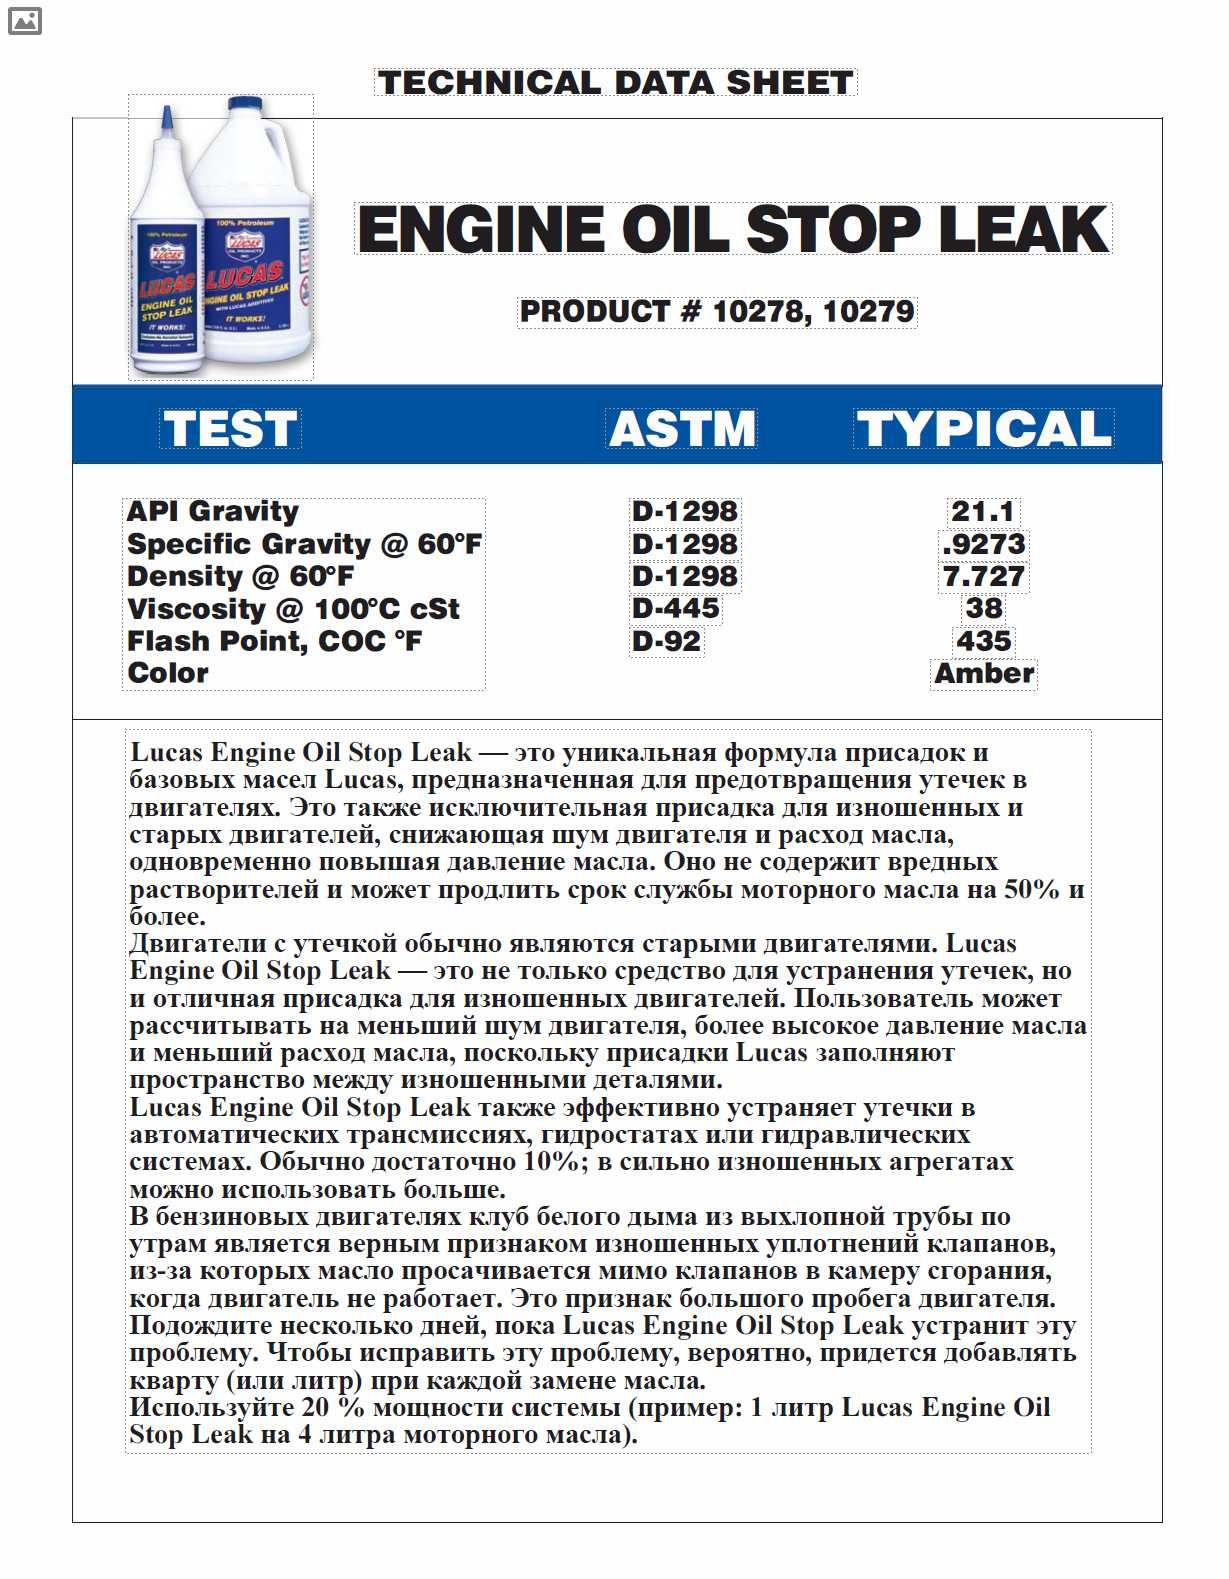 Lucas oil engine oil stop leak герметик для для остановки утечек масла